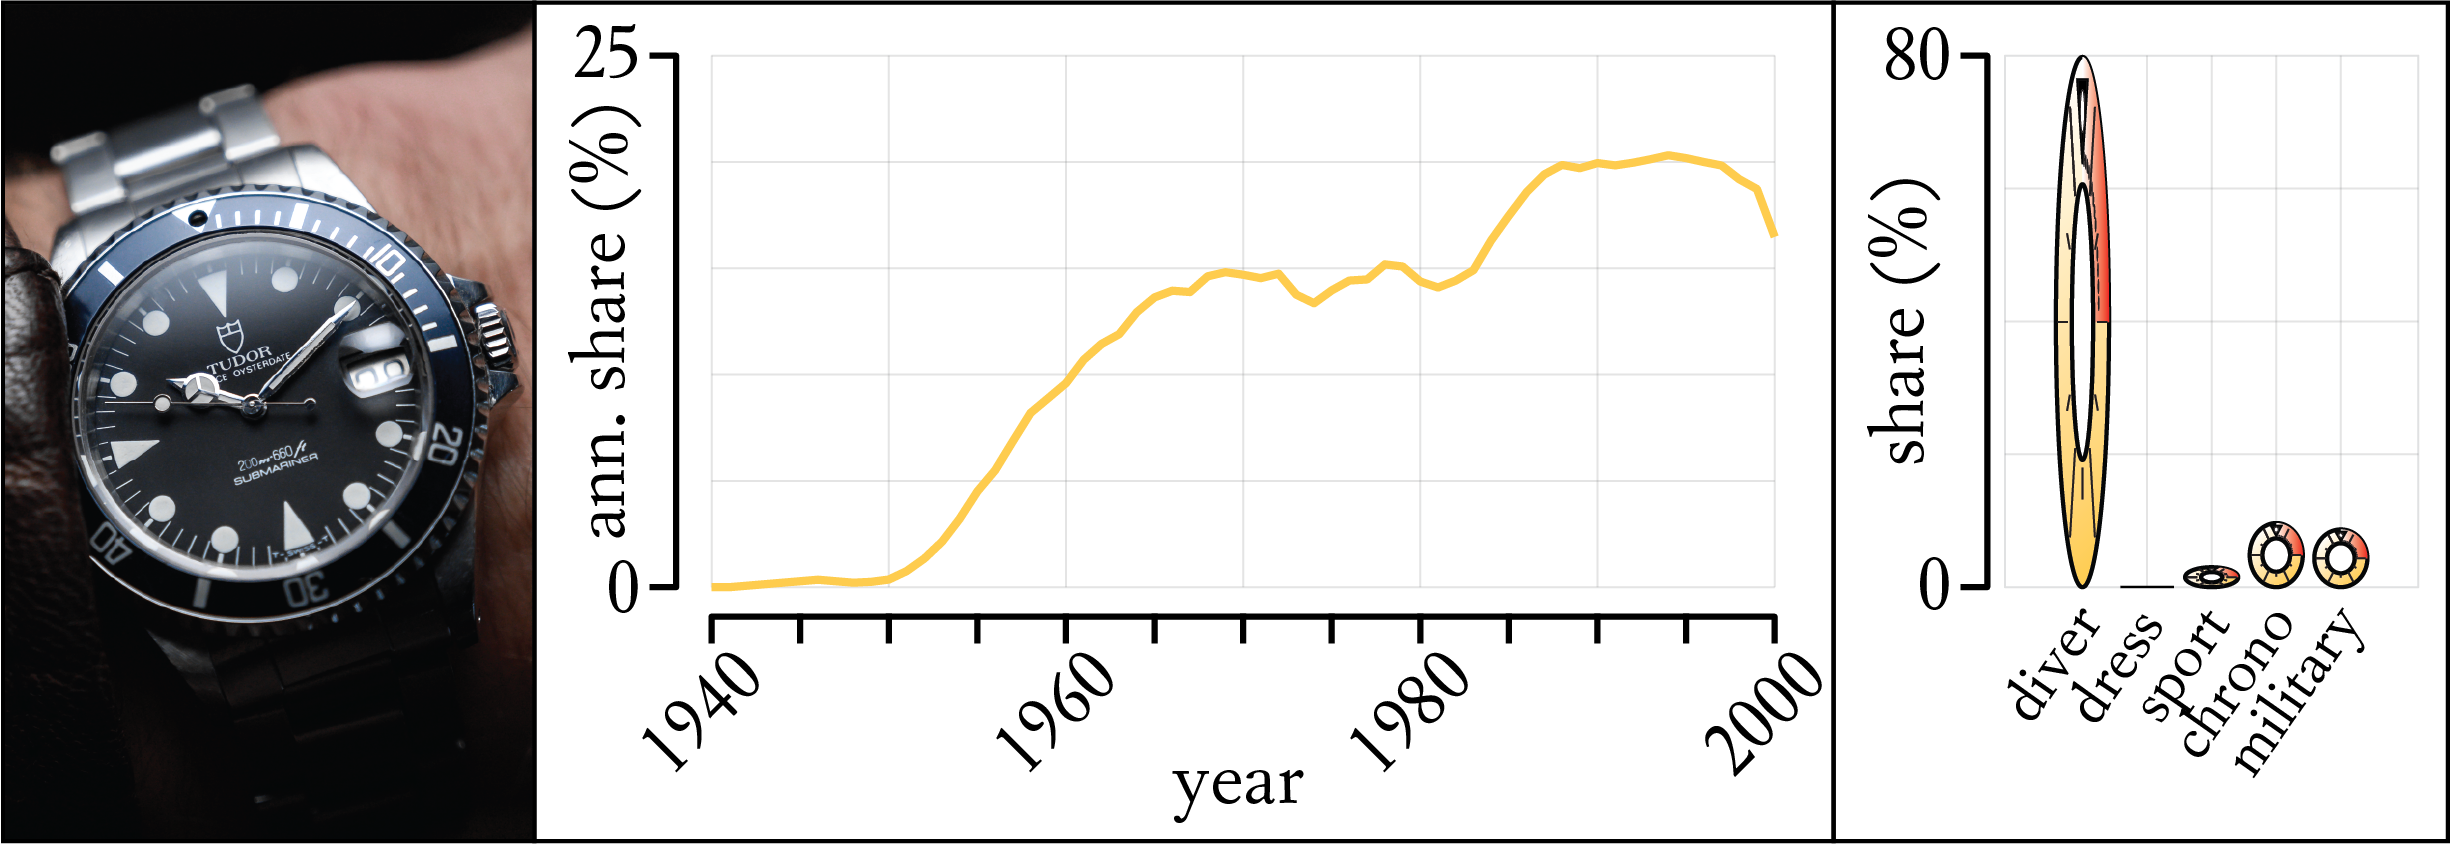 Distribution of Diver bezels and a vintage 1980s Tudor Submariner